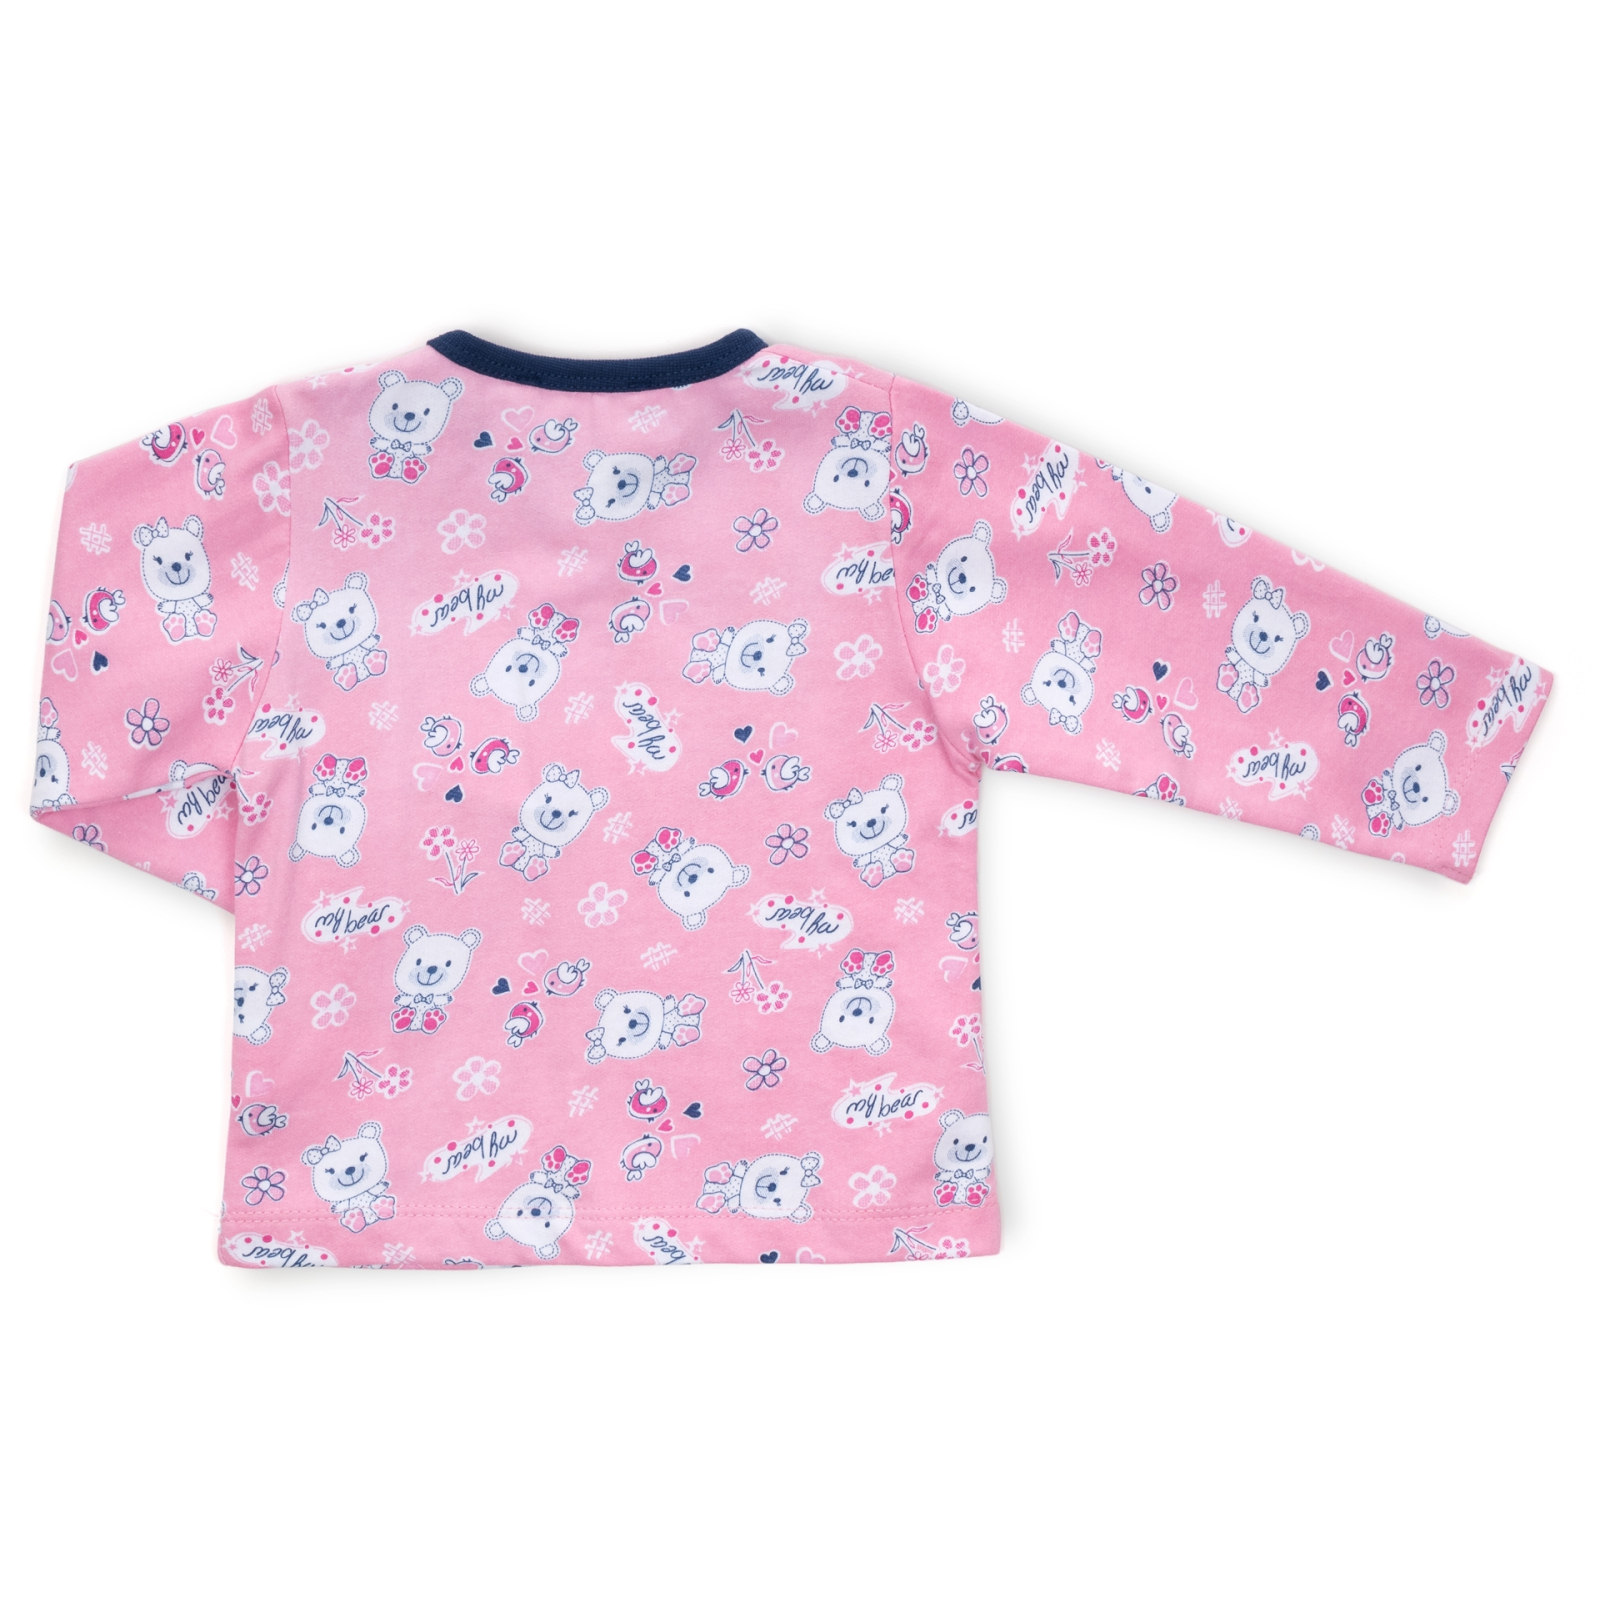 Пижама Breeze с мишками (8382-104G-pink) изображение 4